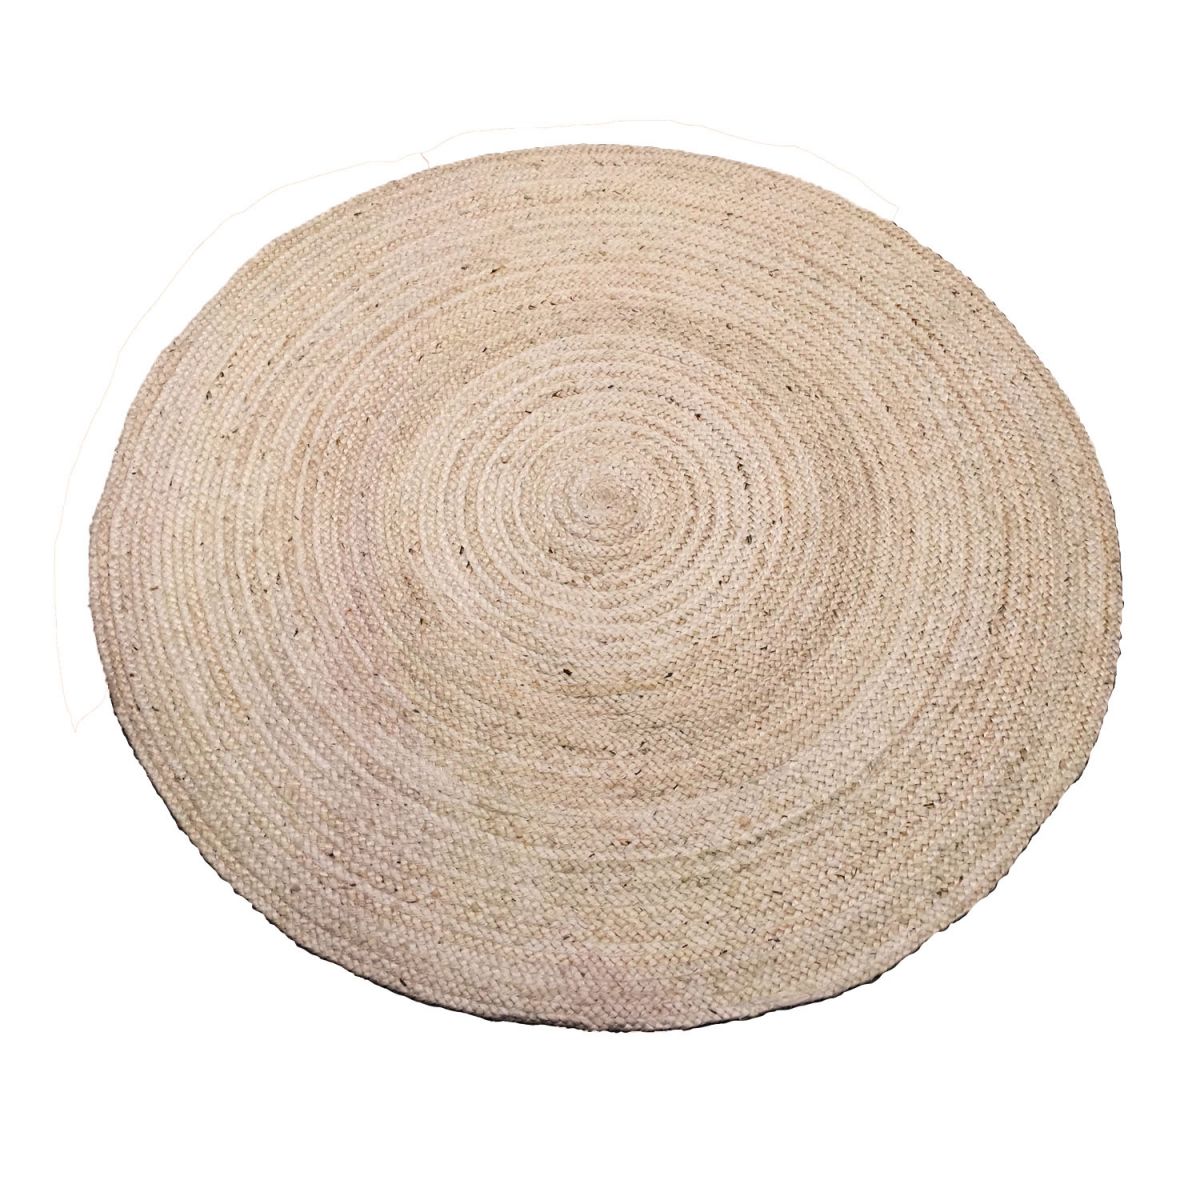 rug jute braided offwhite round 200cm